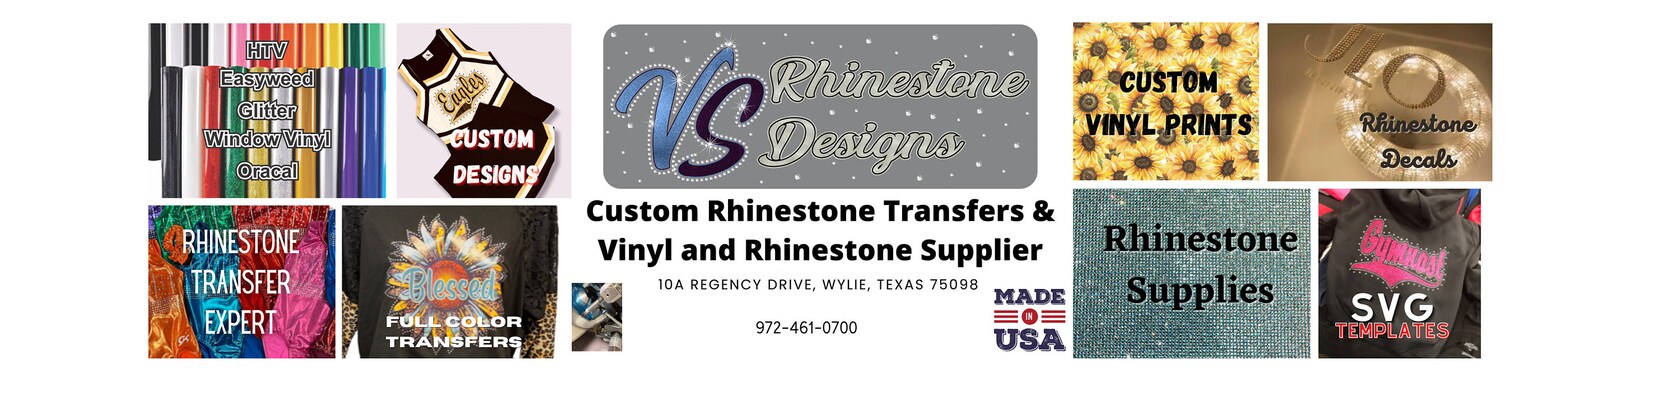 Living Victoriously LV Custom Rhinestone Transfer - Texas Rhinestone